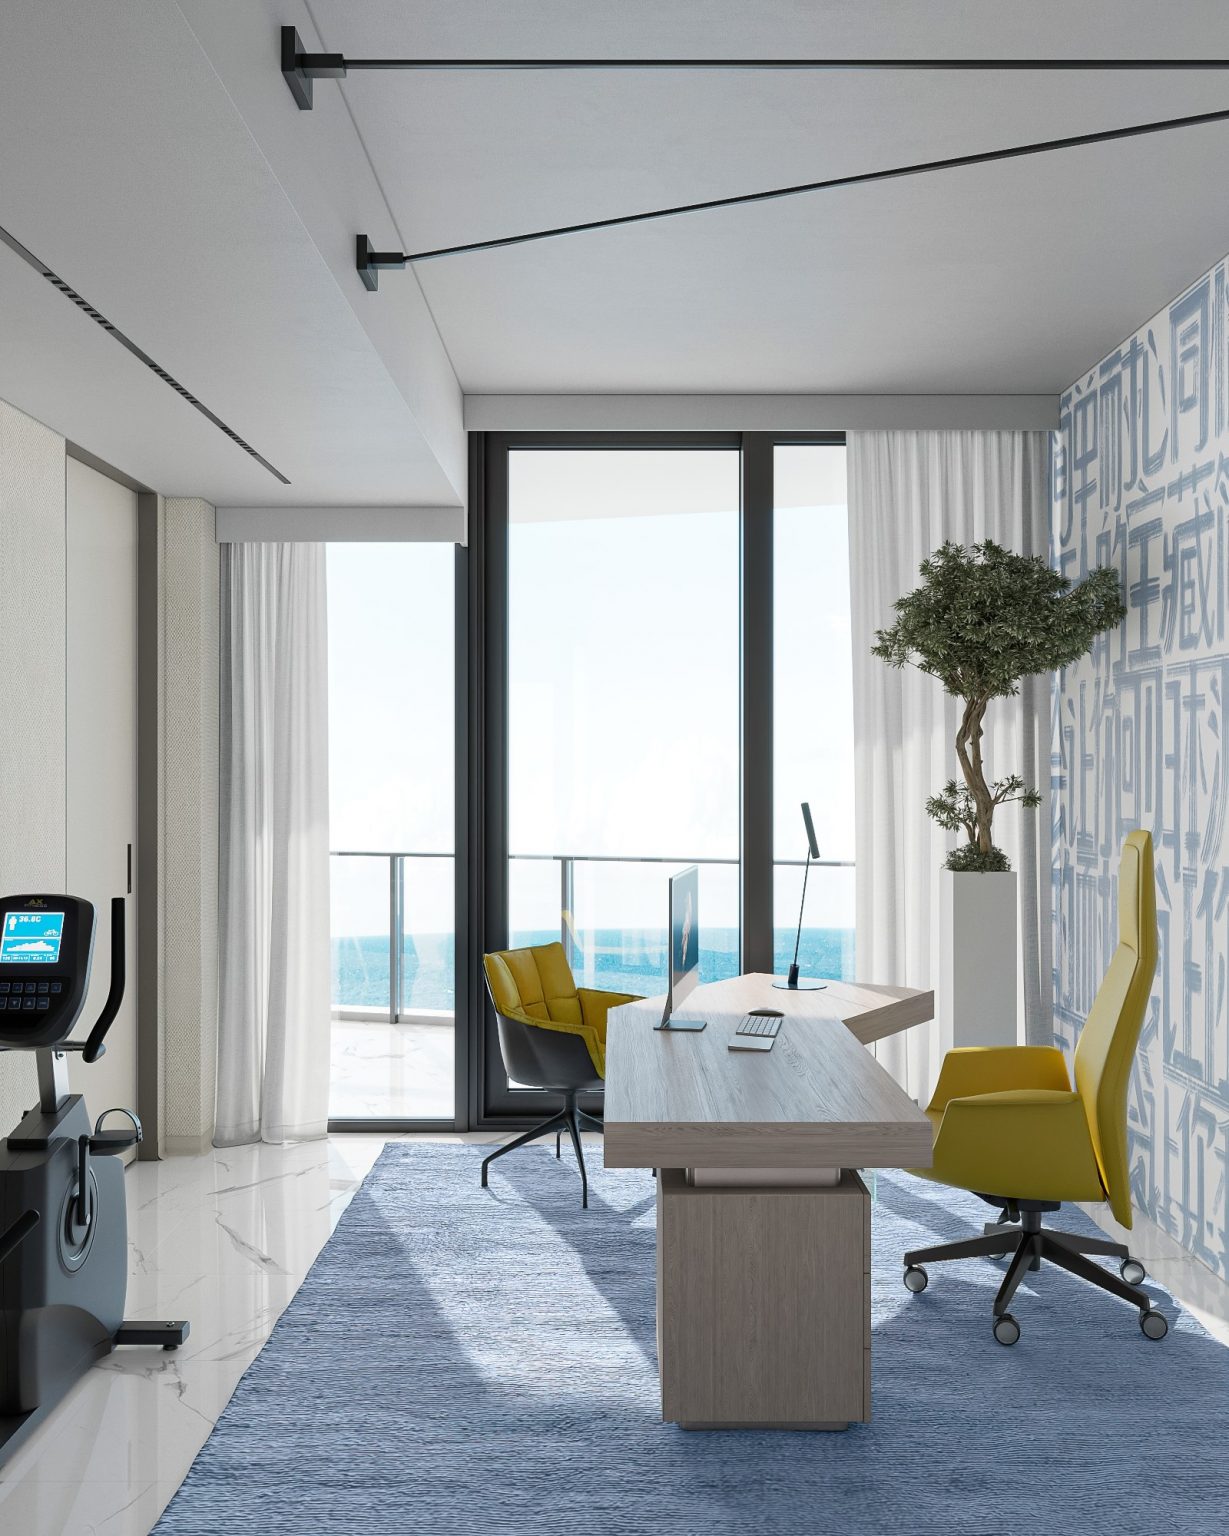 Residential Interior Designer Miami - Natalya Starinova. Project release 2021. Phone : +1 (954) 955-2278, Email : natalya@starinova.com